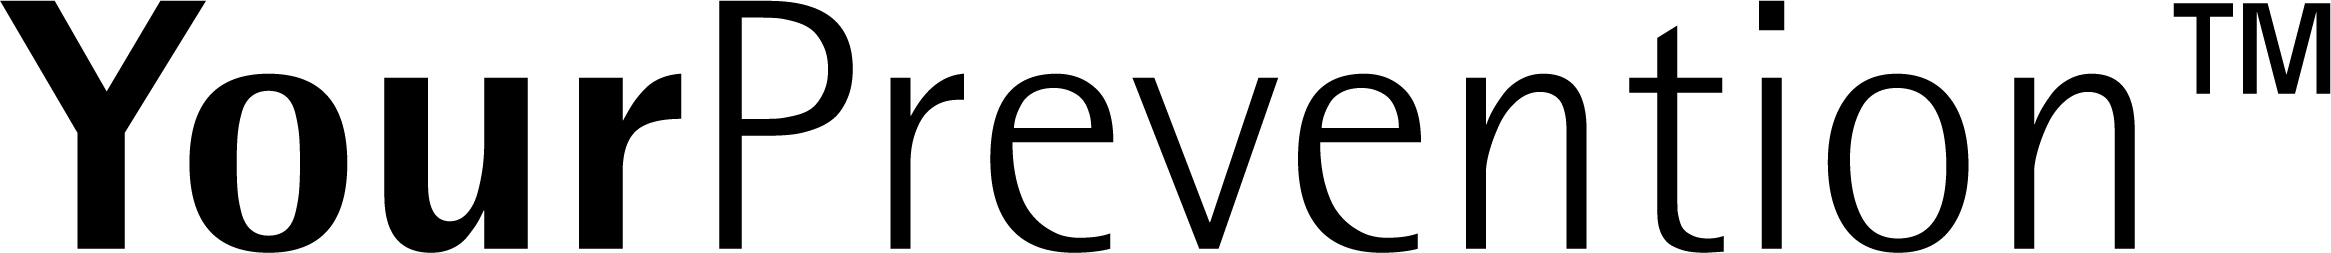 Logo des AMM-Partners "YourPrevention"